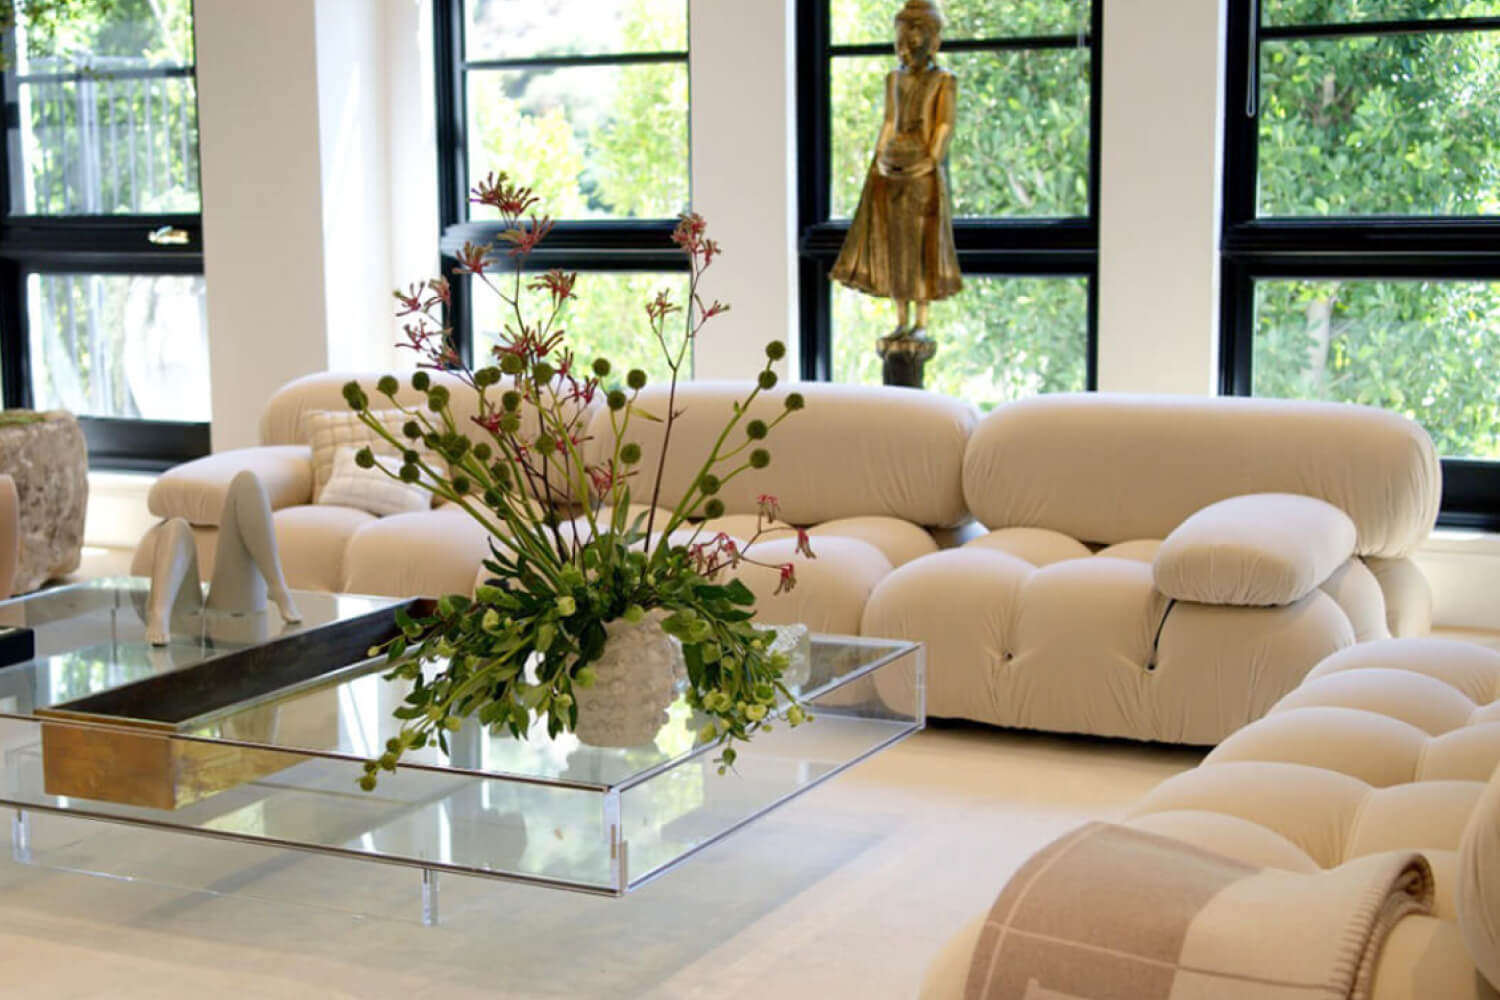 A bright living room featuring a Mario Bellini sofa.